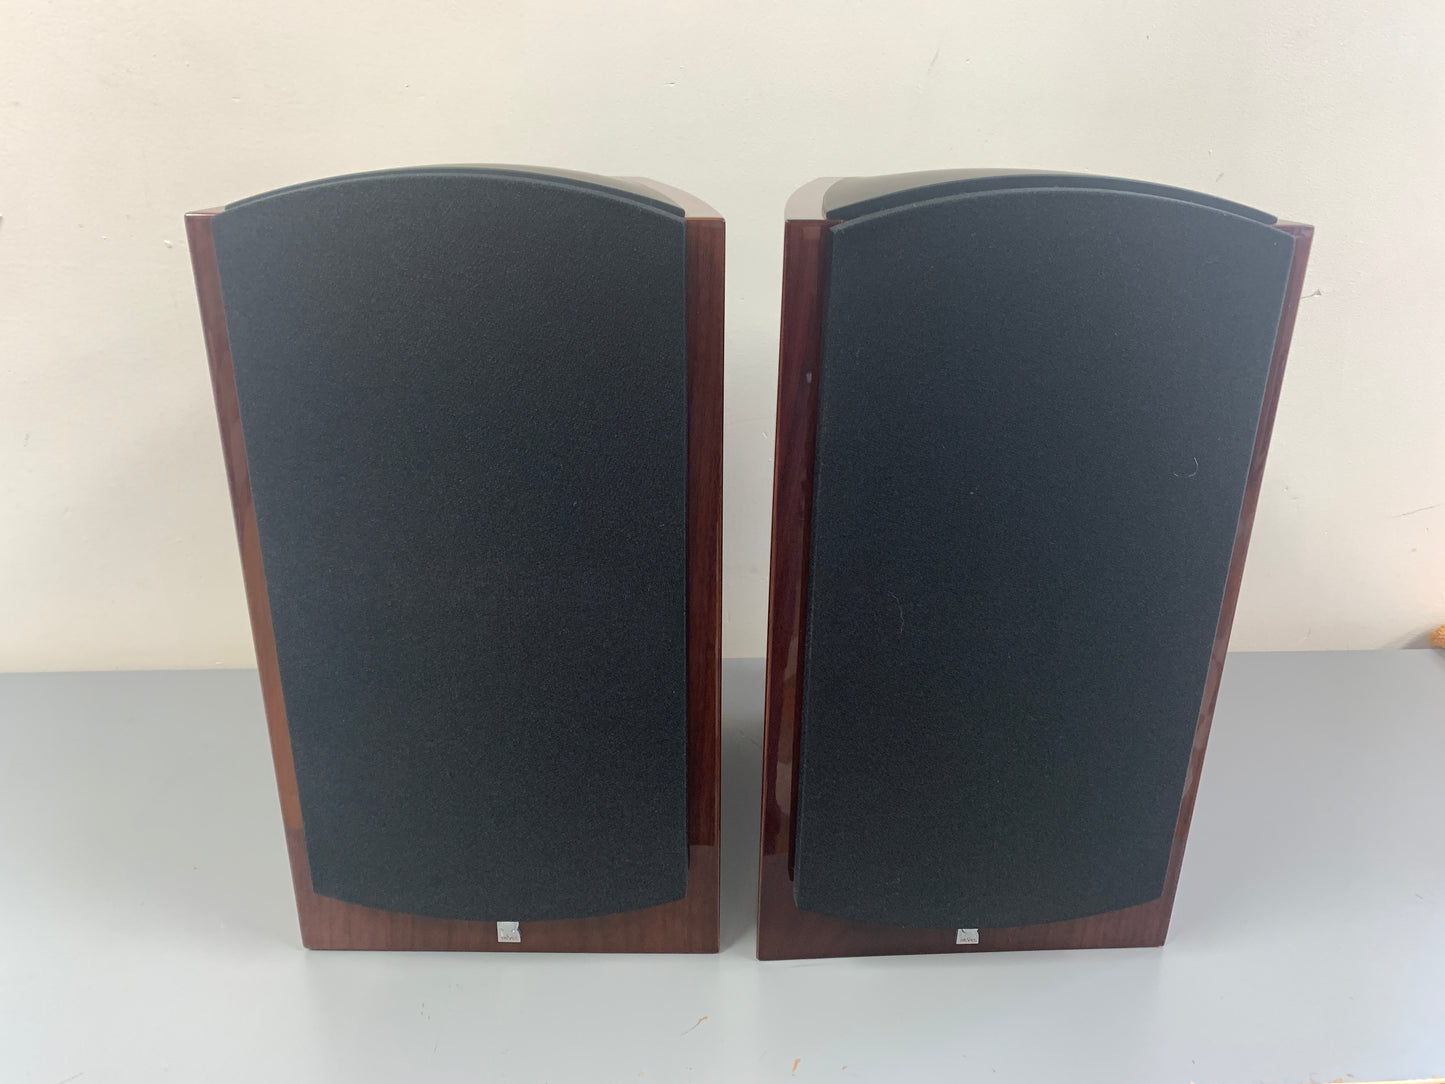 Revel Performa3 M105 Bookshelf Speakers